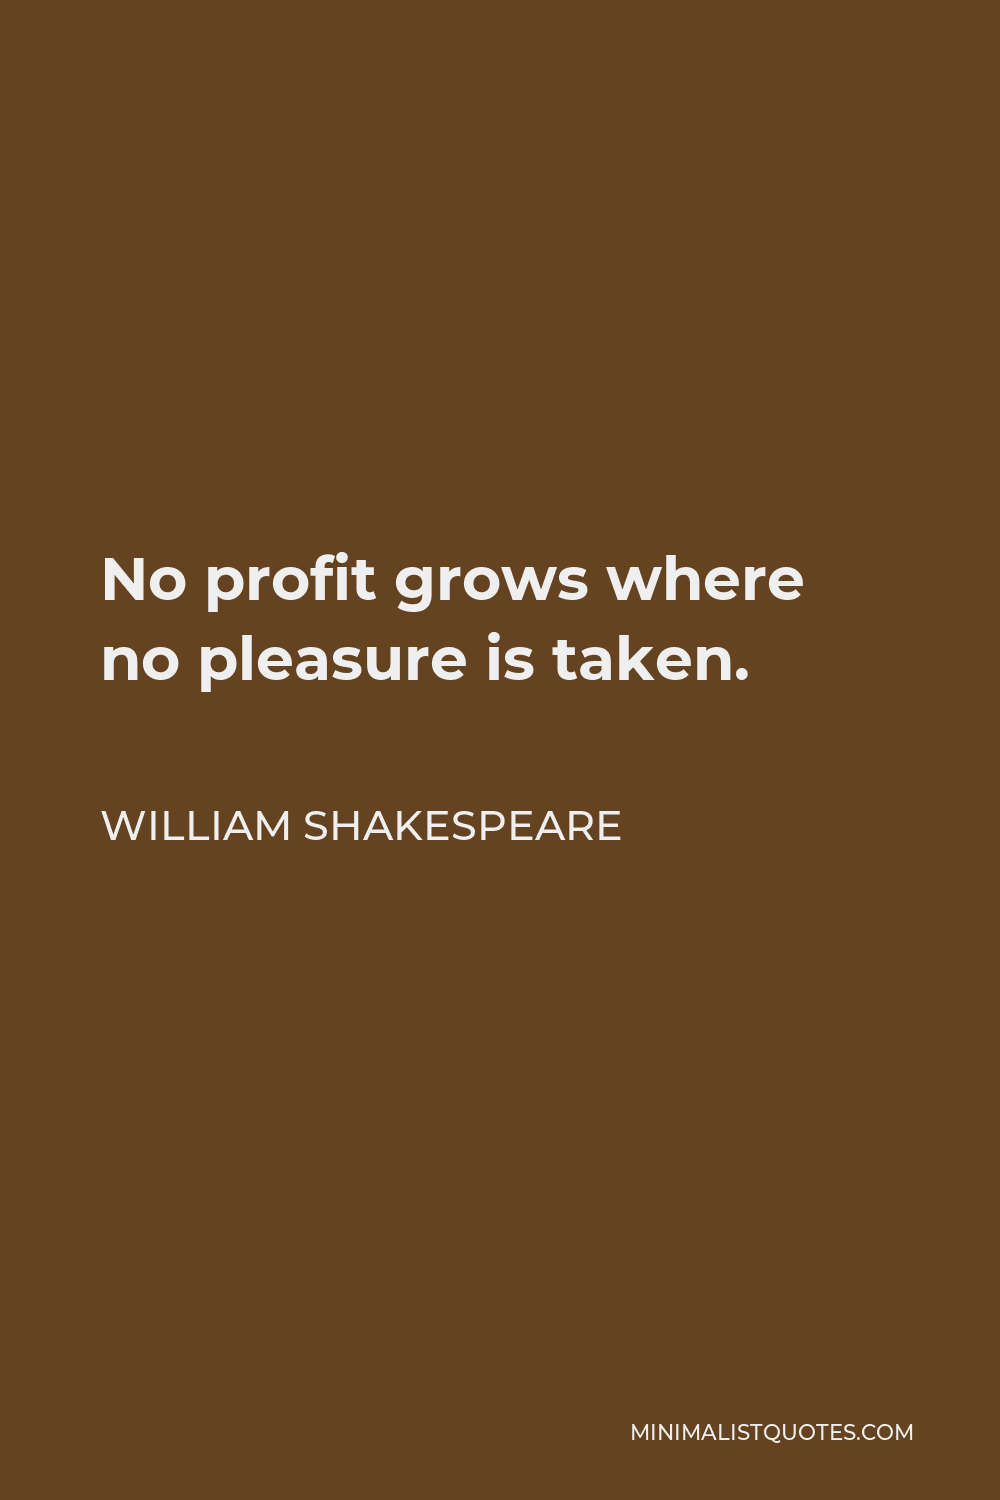 William Shakespeare Quote - No profit grows where no pleasure is taken.